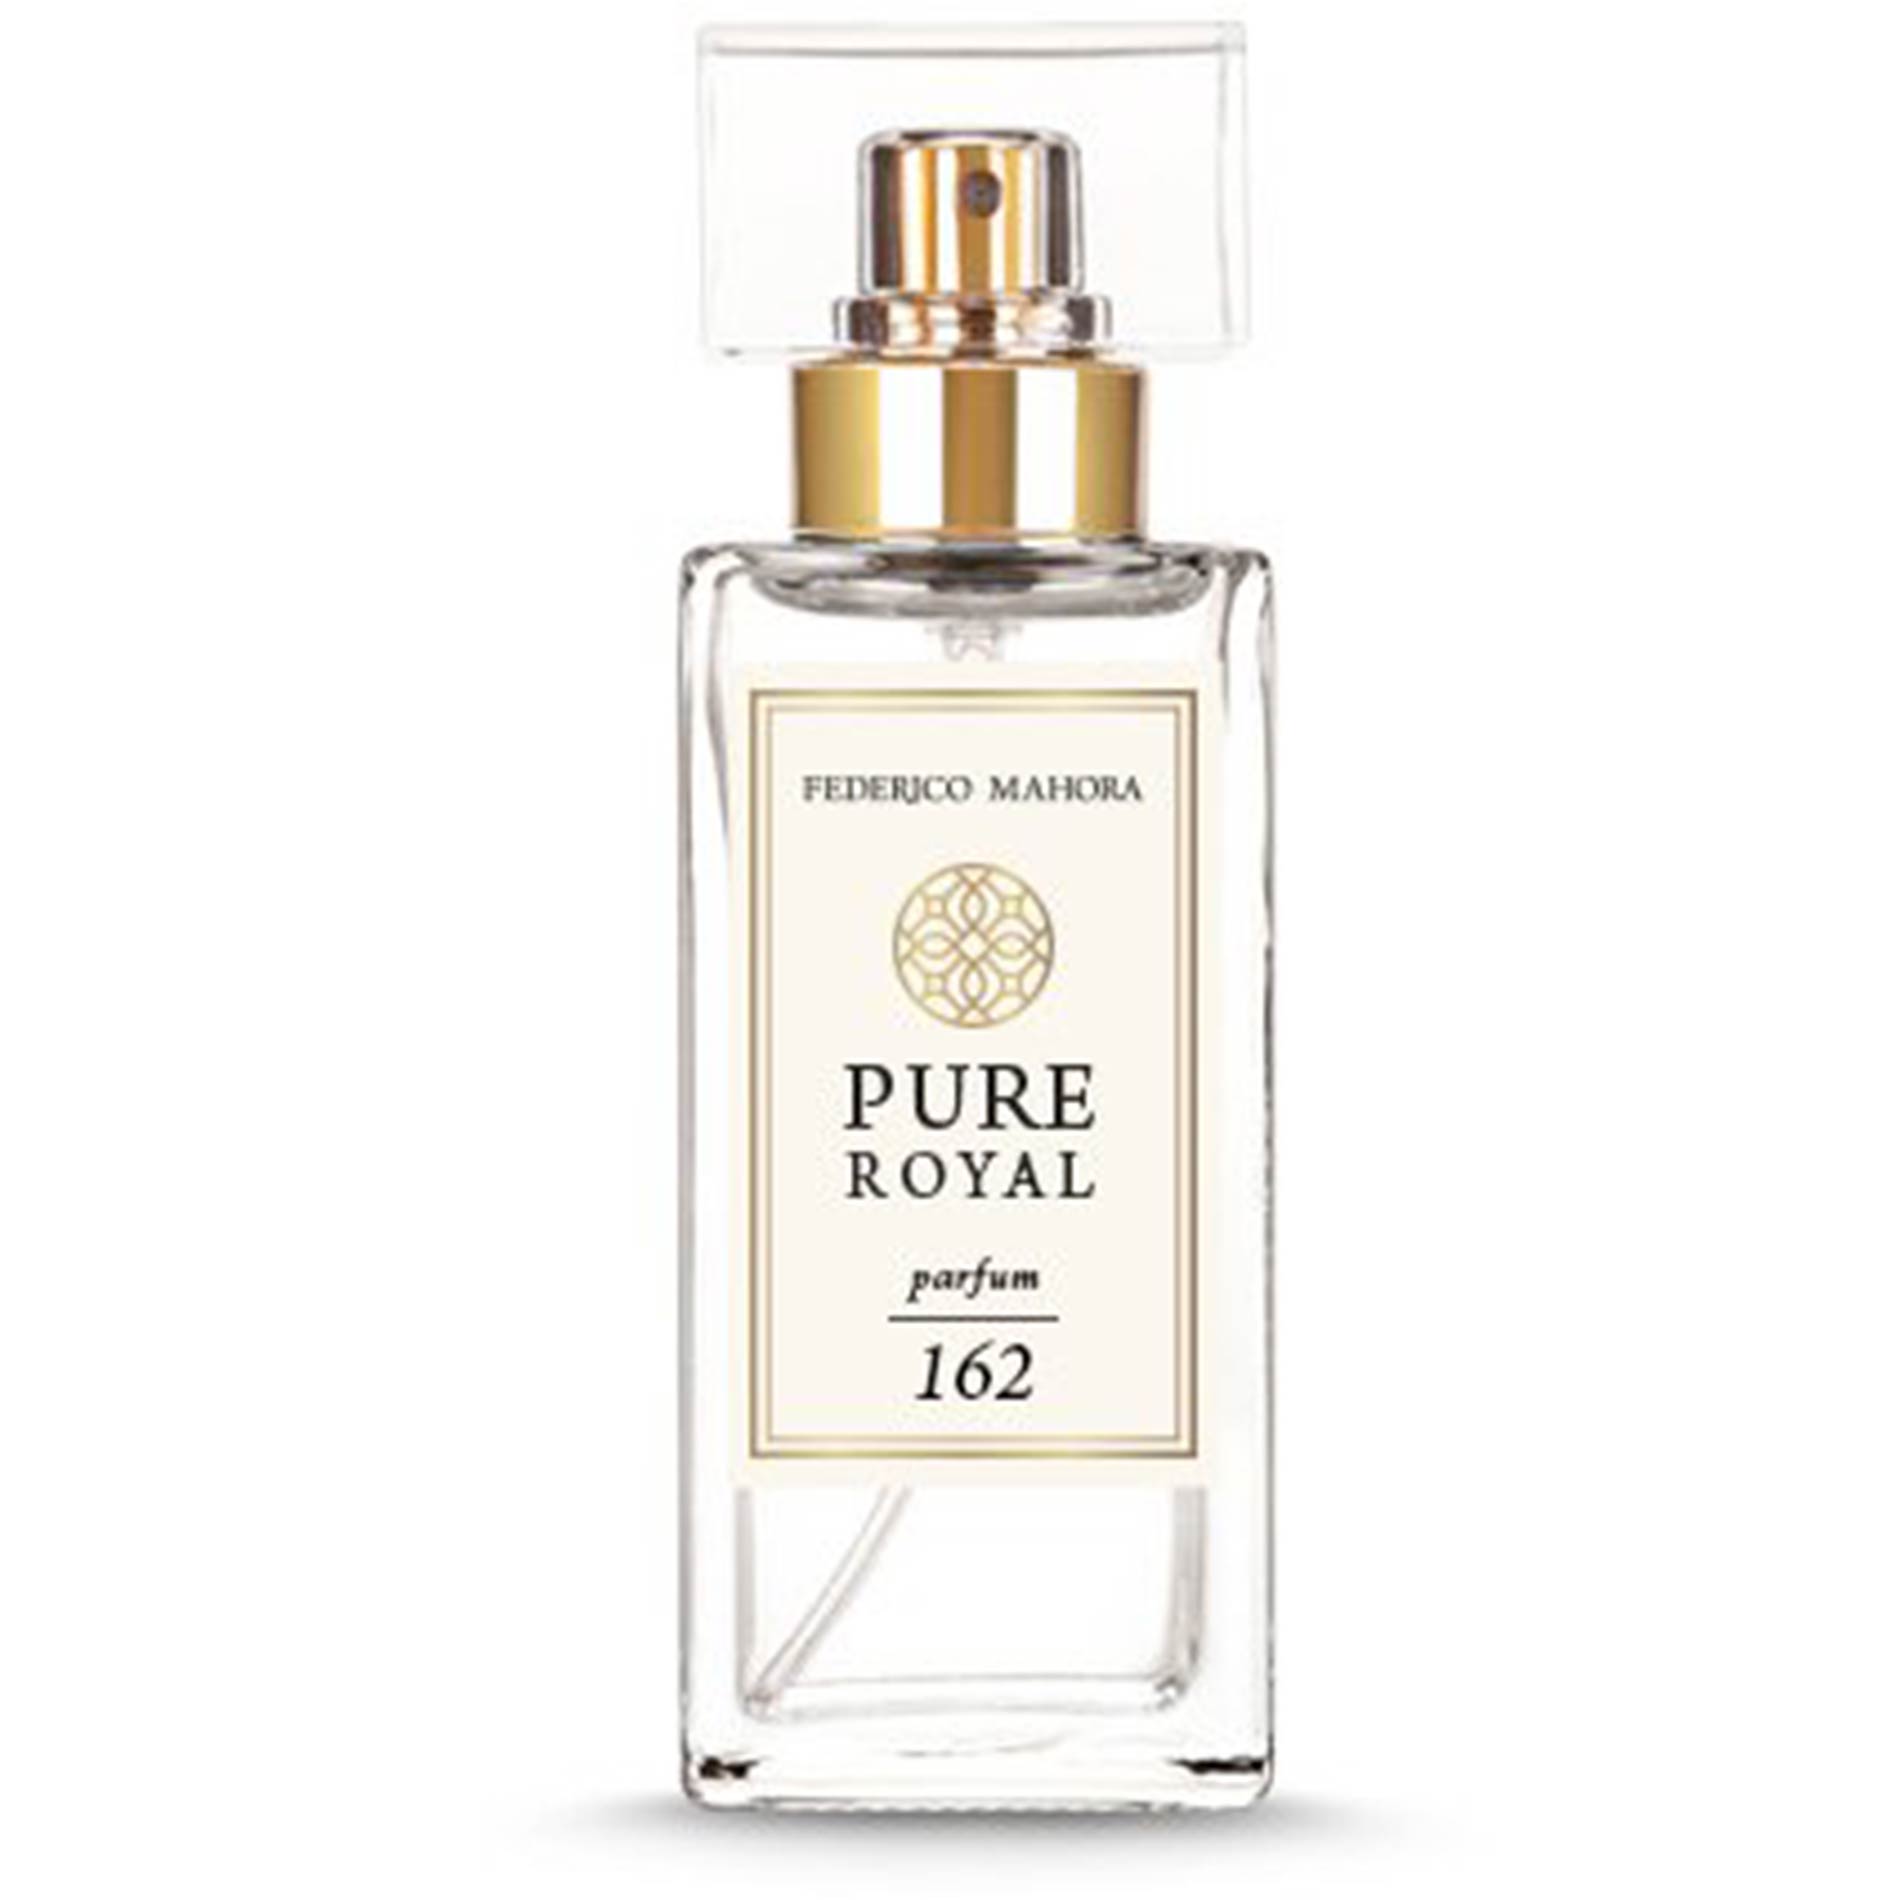 PURE ROYAL162 Parfum by Federico Mahora